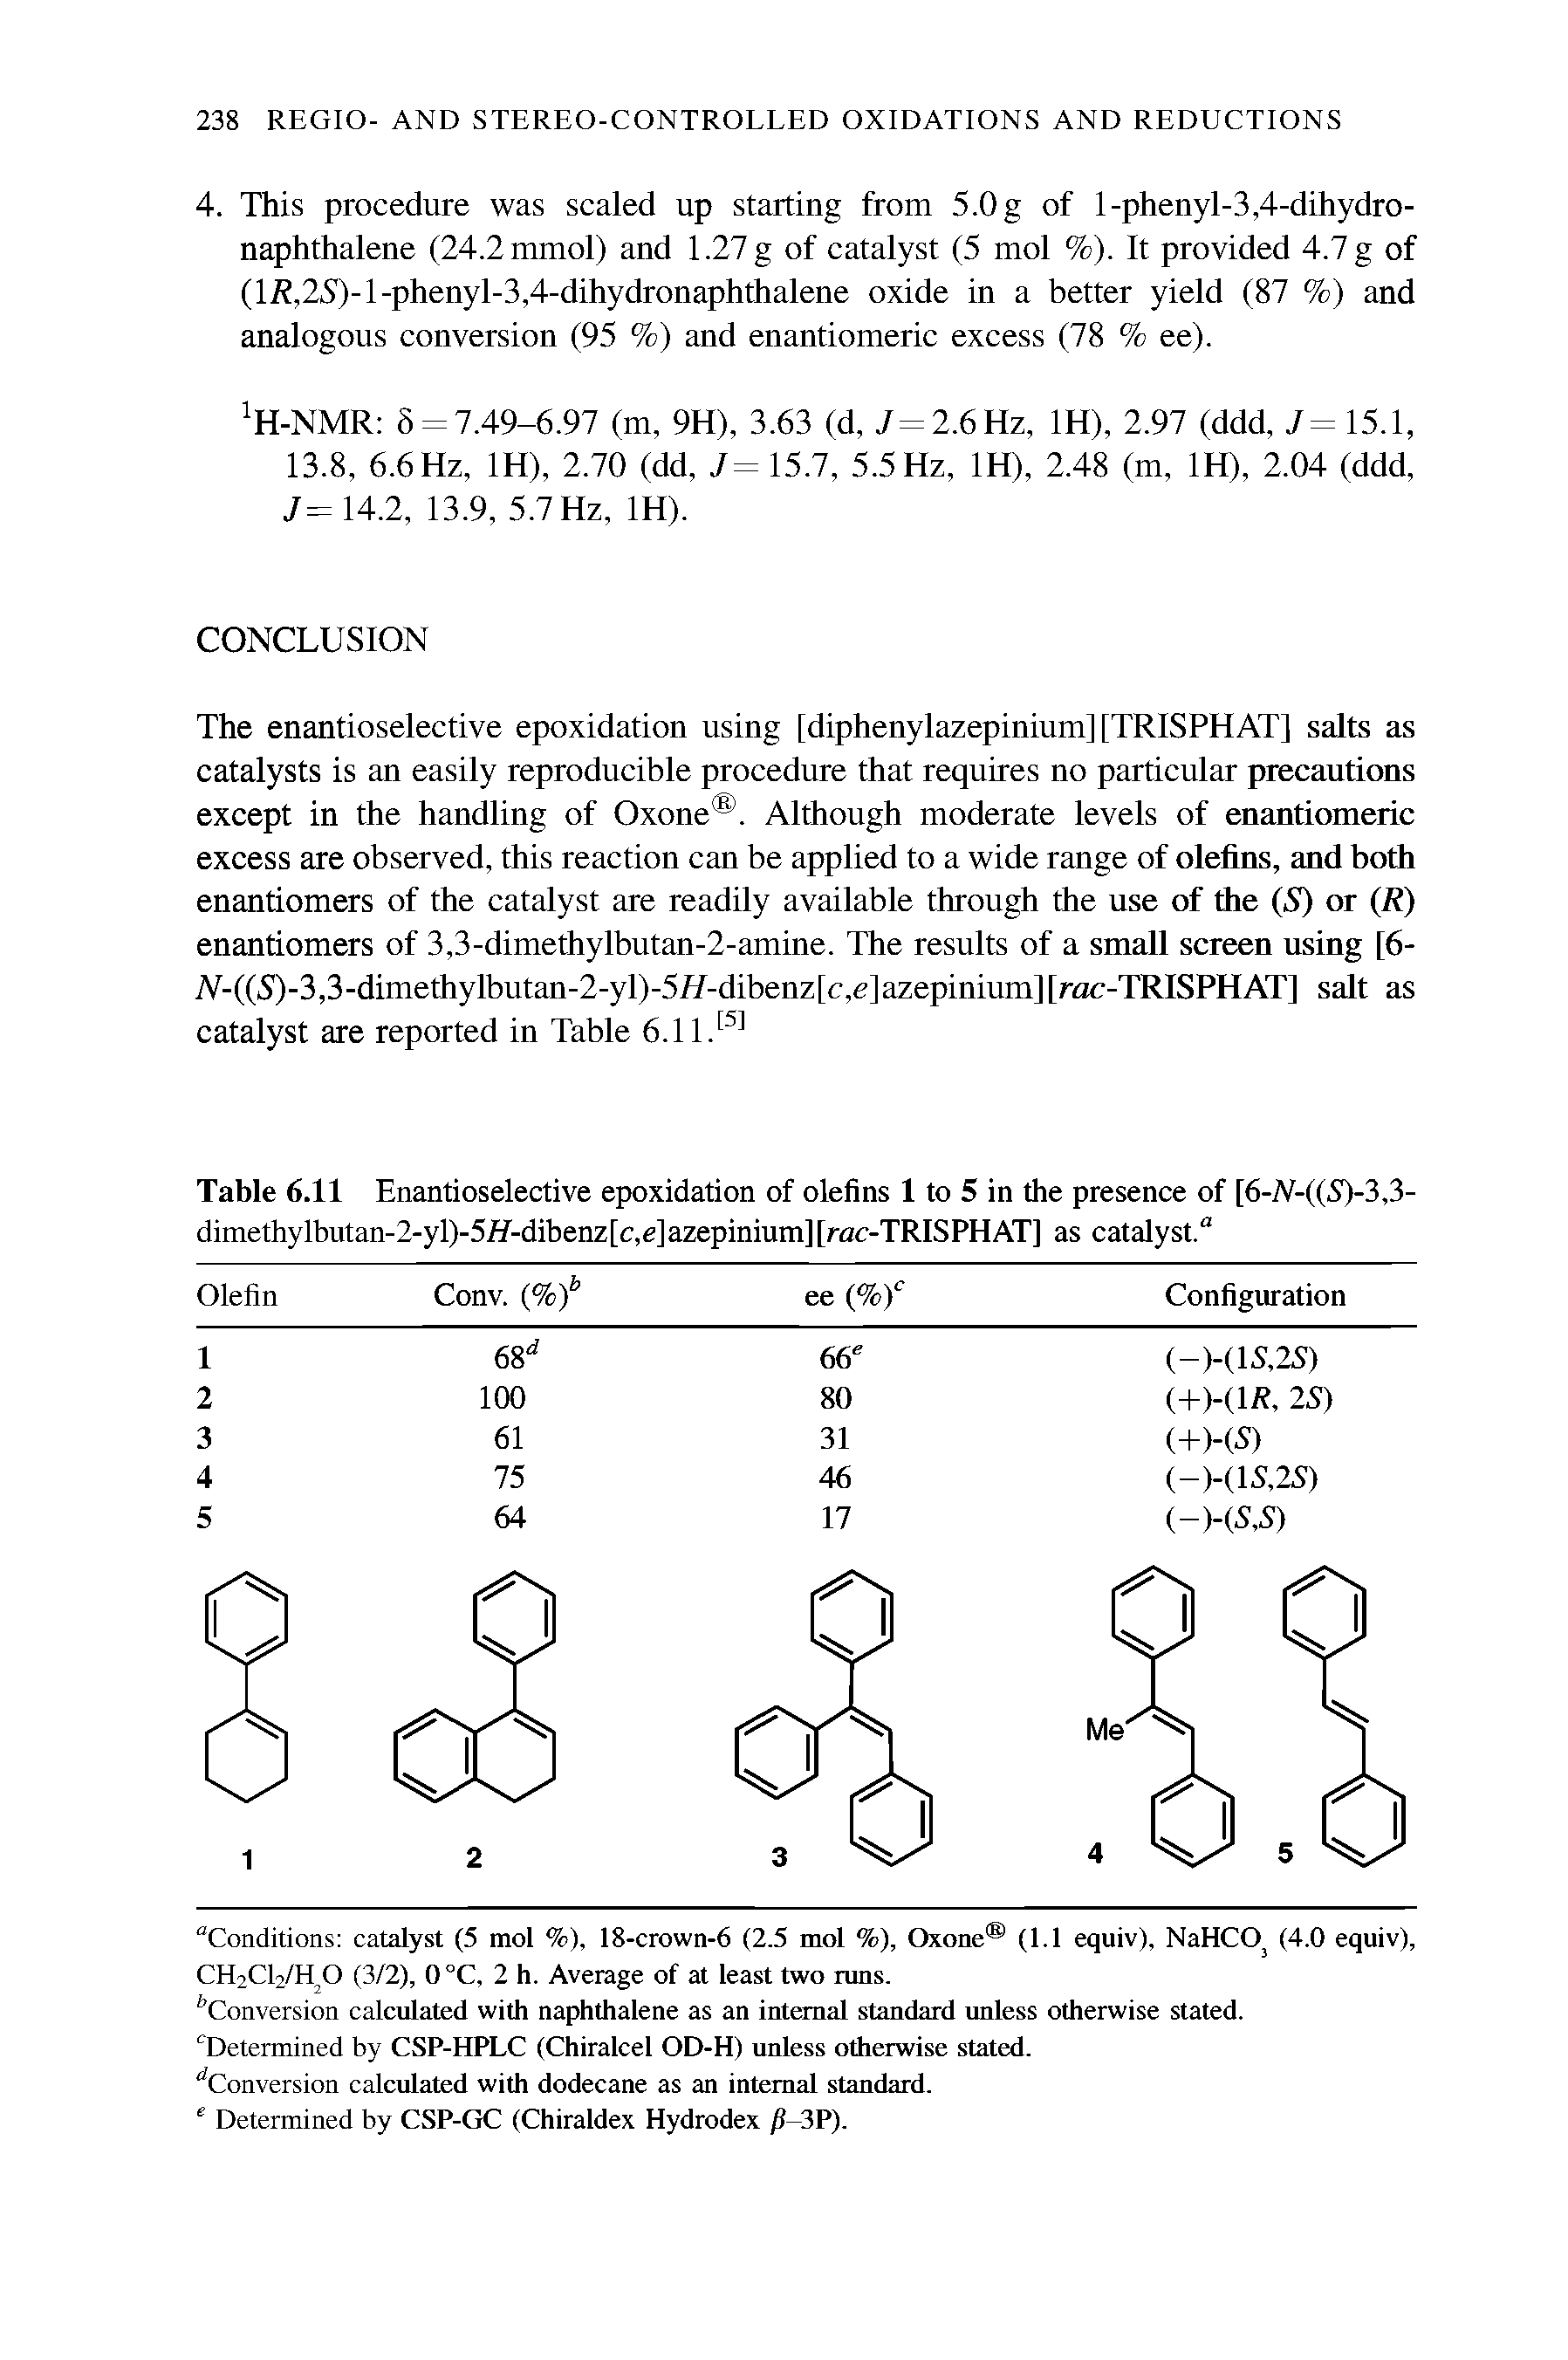 Table 6.11 Enantioselective epoxidation of olefins 1 to 5 in the presence of [6-N-((S)-3,3-dimethylbutan-2-yl)-5/f-dibenz[c,e]azepinium][rac-TRISPHAT] as catalyst."...